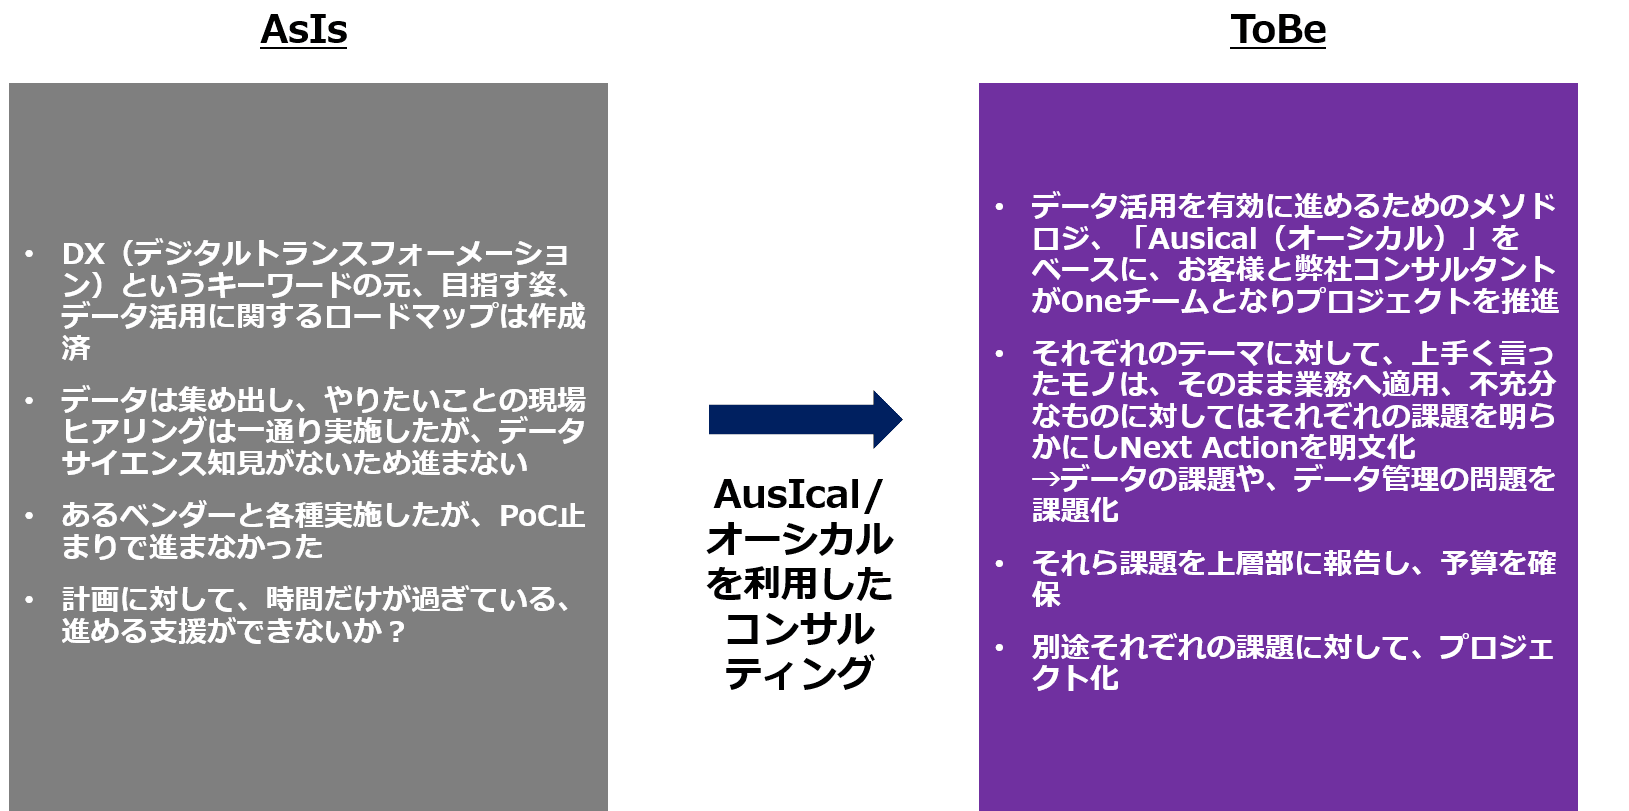 https://isid-ai.jp/assets/images/column/column09/figure1.png